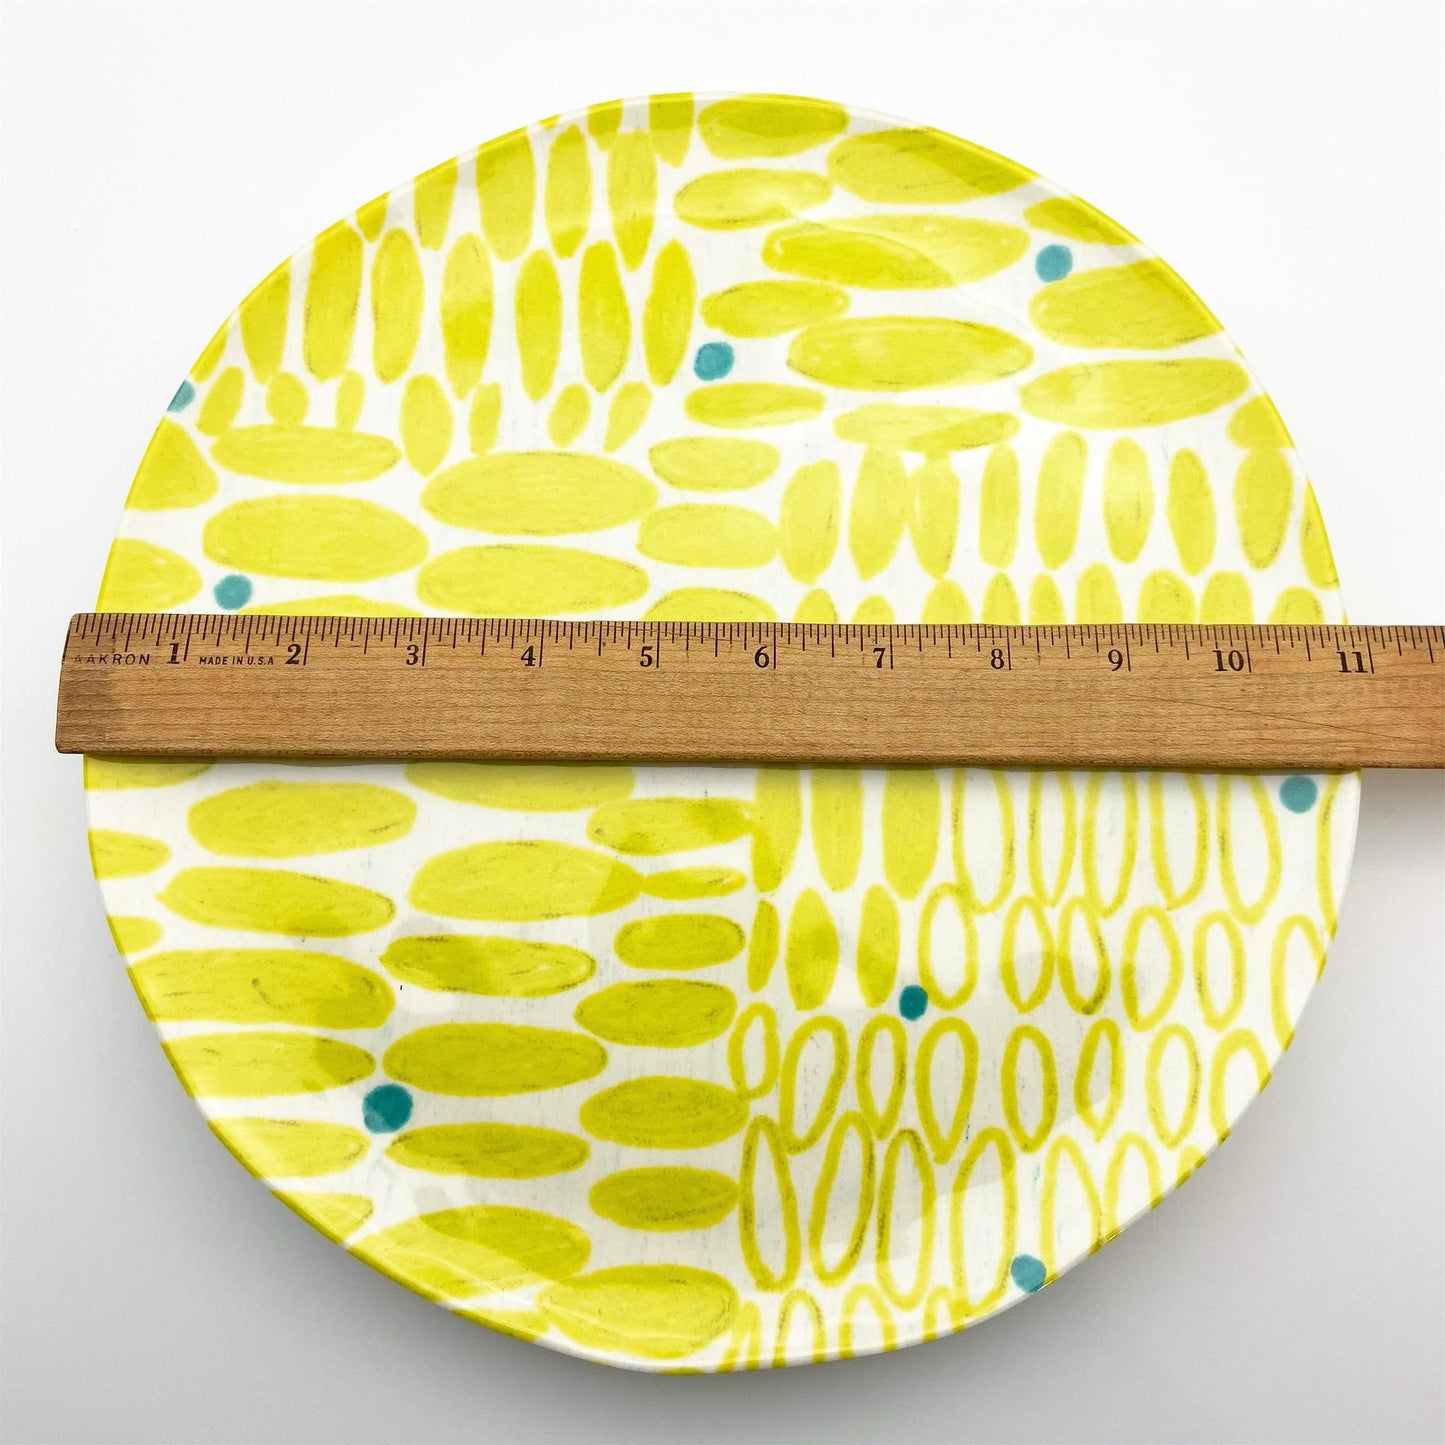 Plate - Melamine - Bold Graphic Patterns